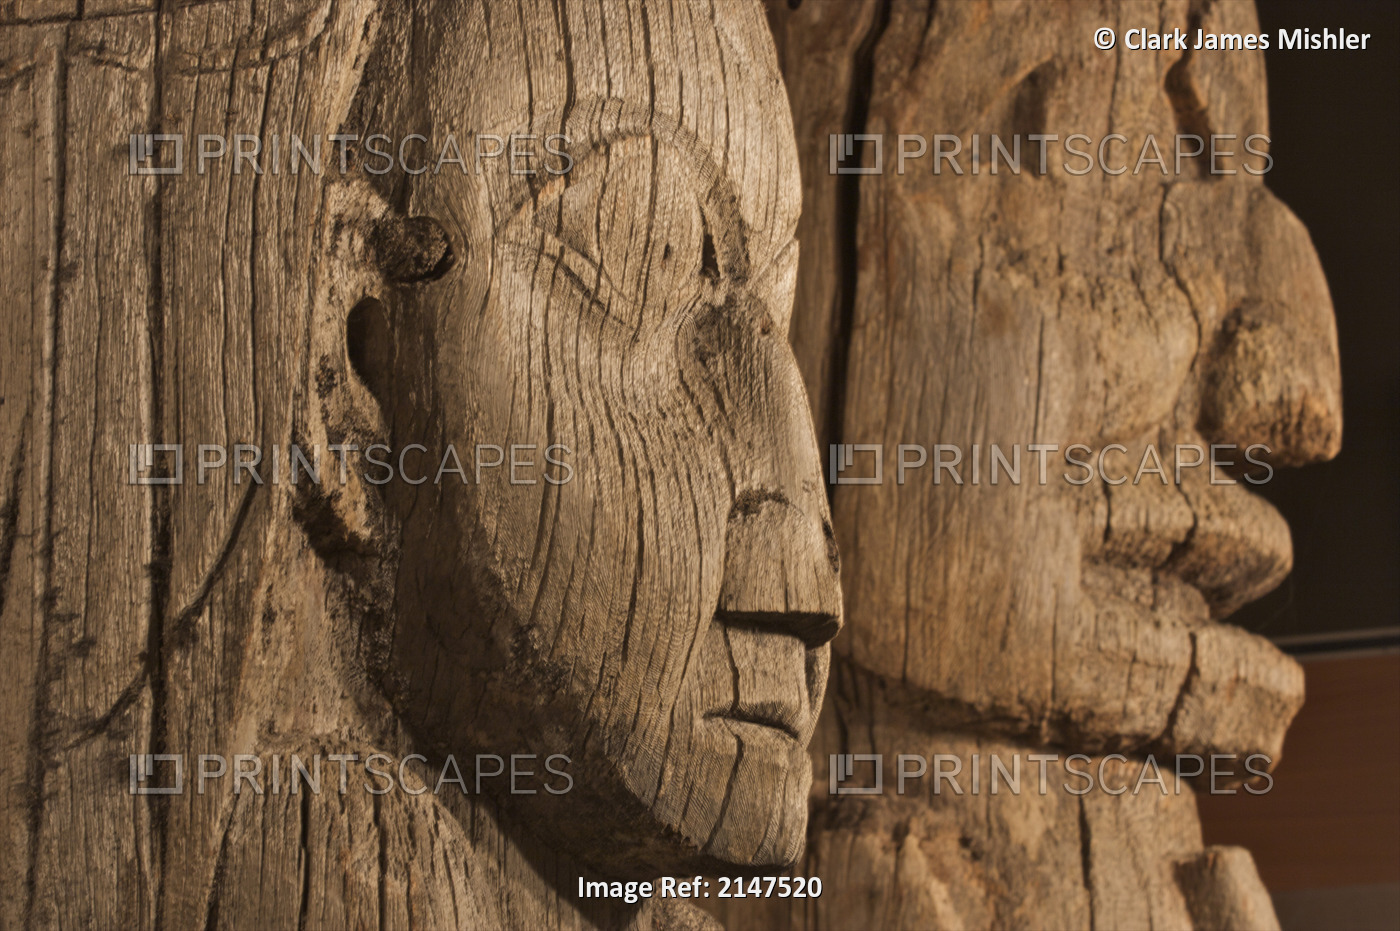 Close Up Of Historic Totem Poles In Ketchikan, Alaska